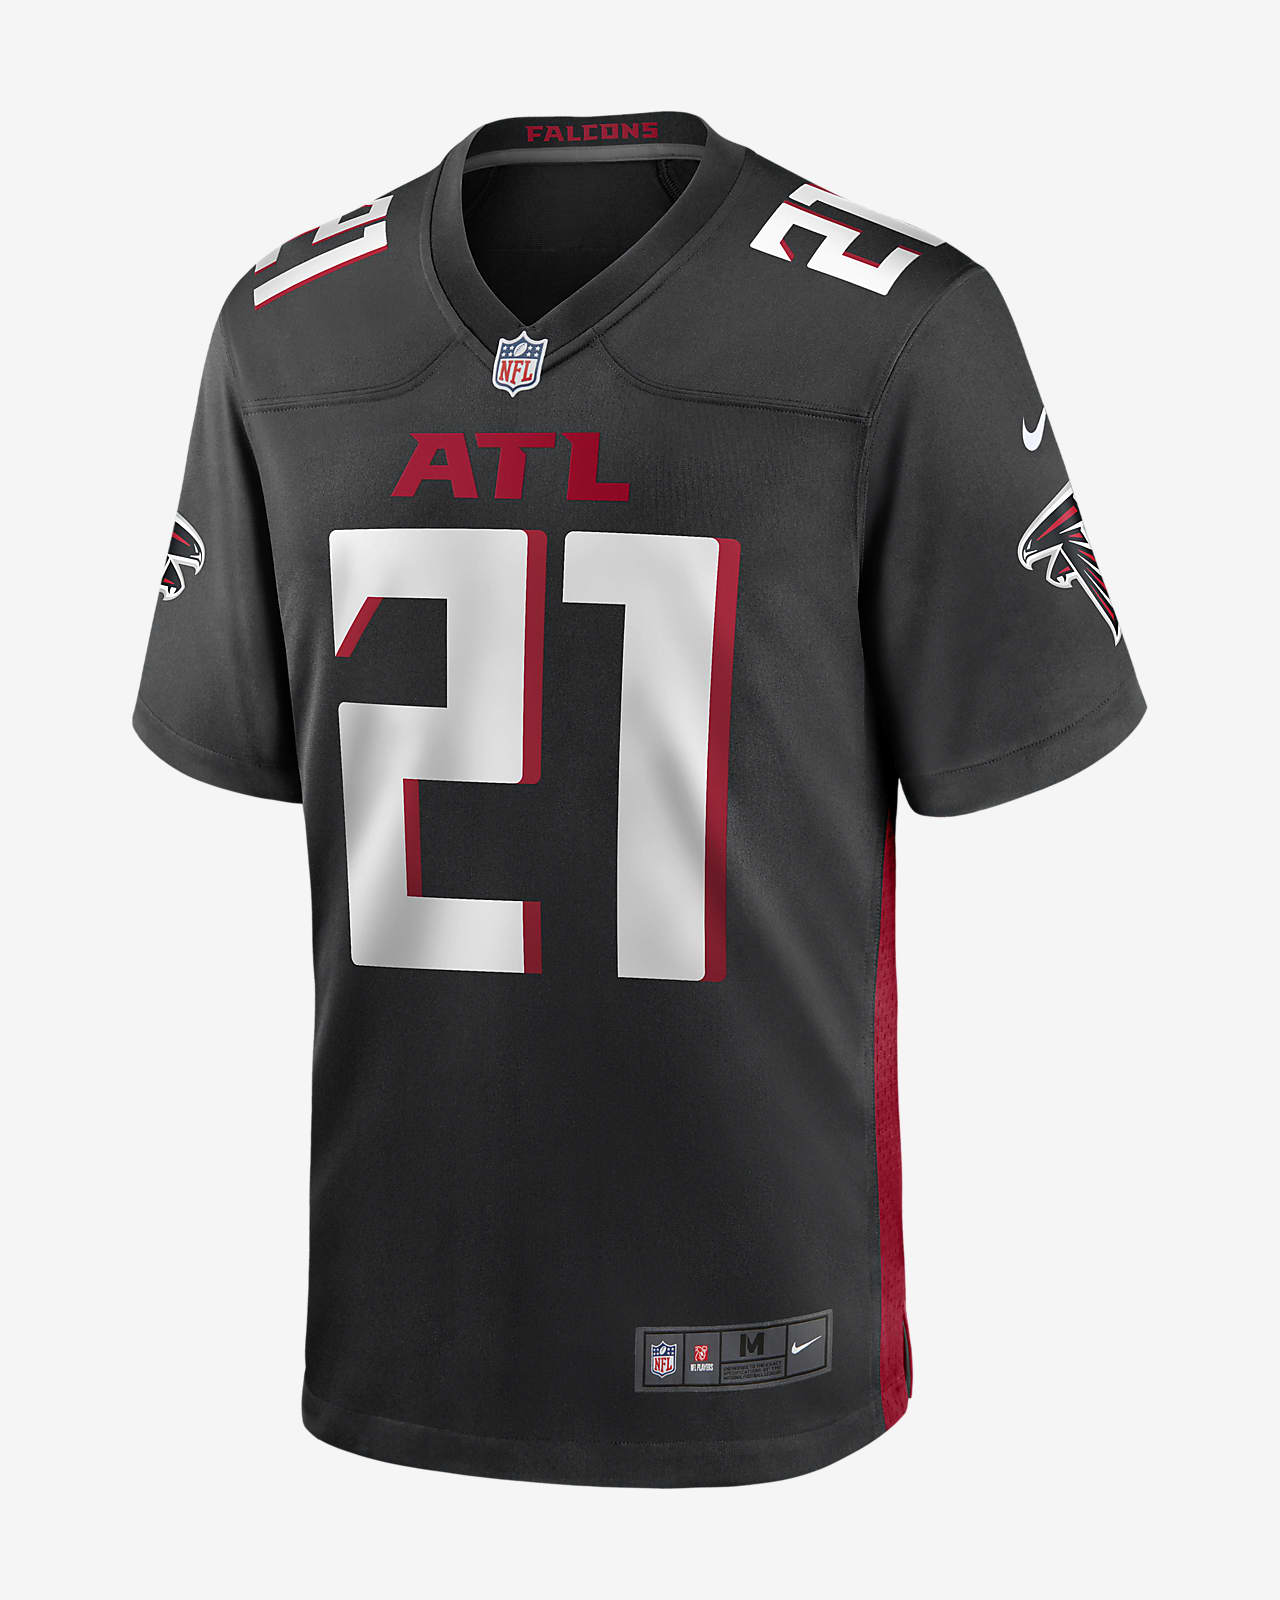 NFL Atlanta Falcons (Todd Gurley) Men's Game Football Jersey